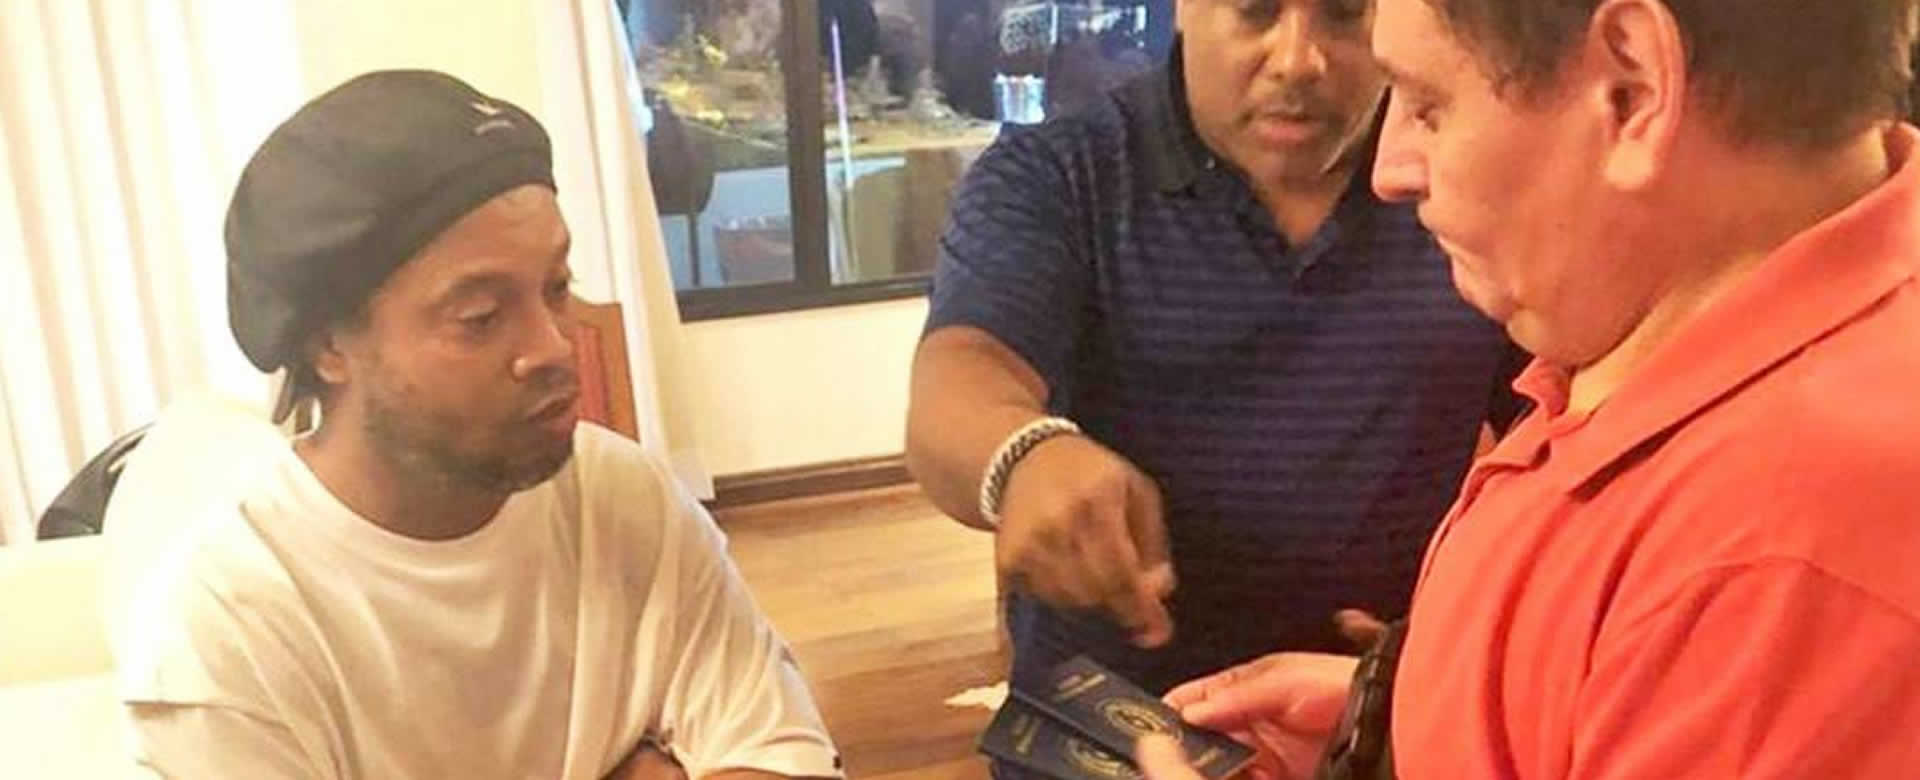 El pasaporte falso de Ronaldinho ha provocado un estallido de memes